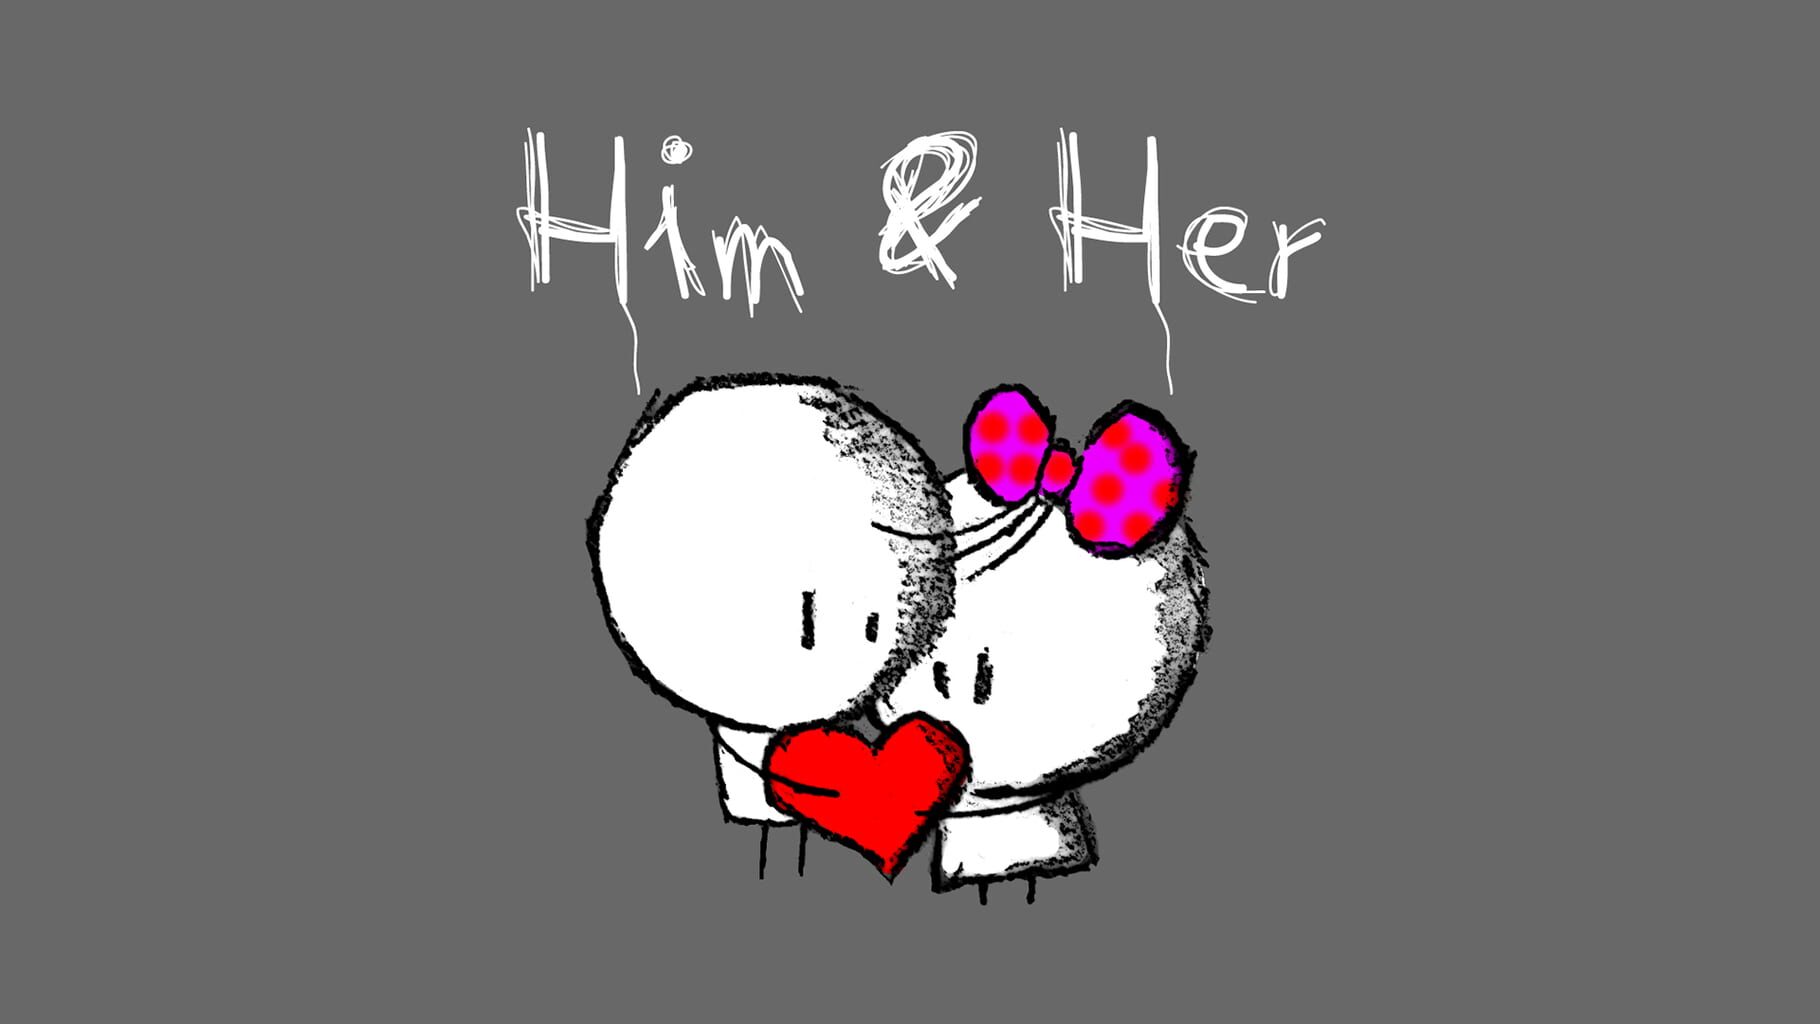 Him & Her artwork